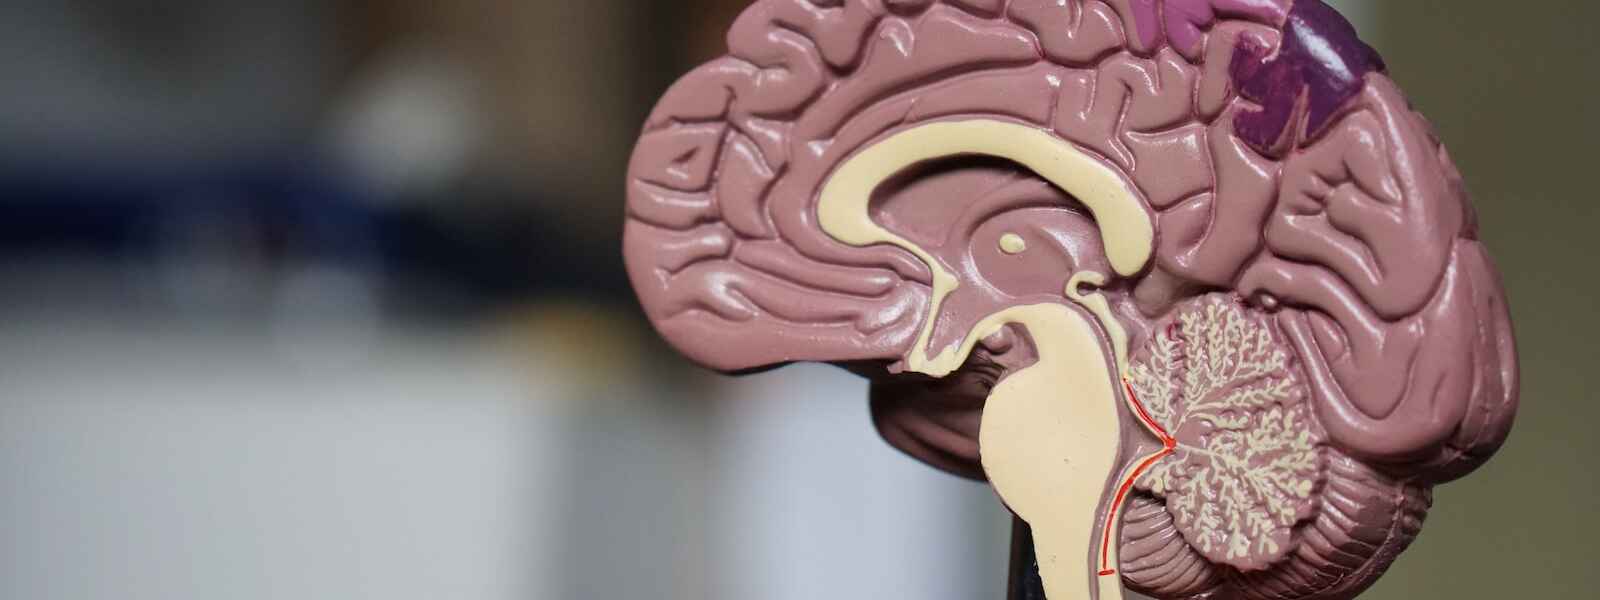 A plastic model of a brown, human brain sliced in half.